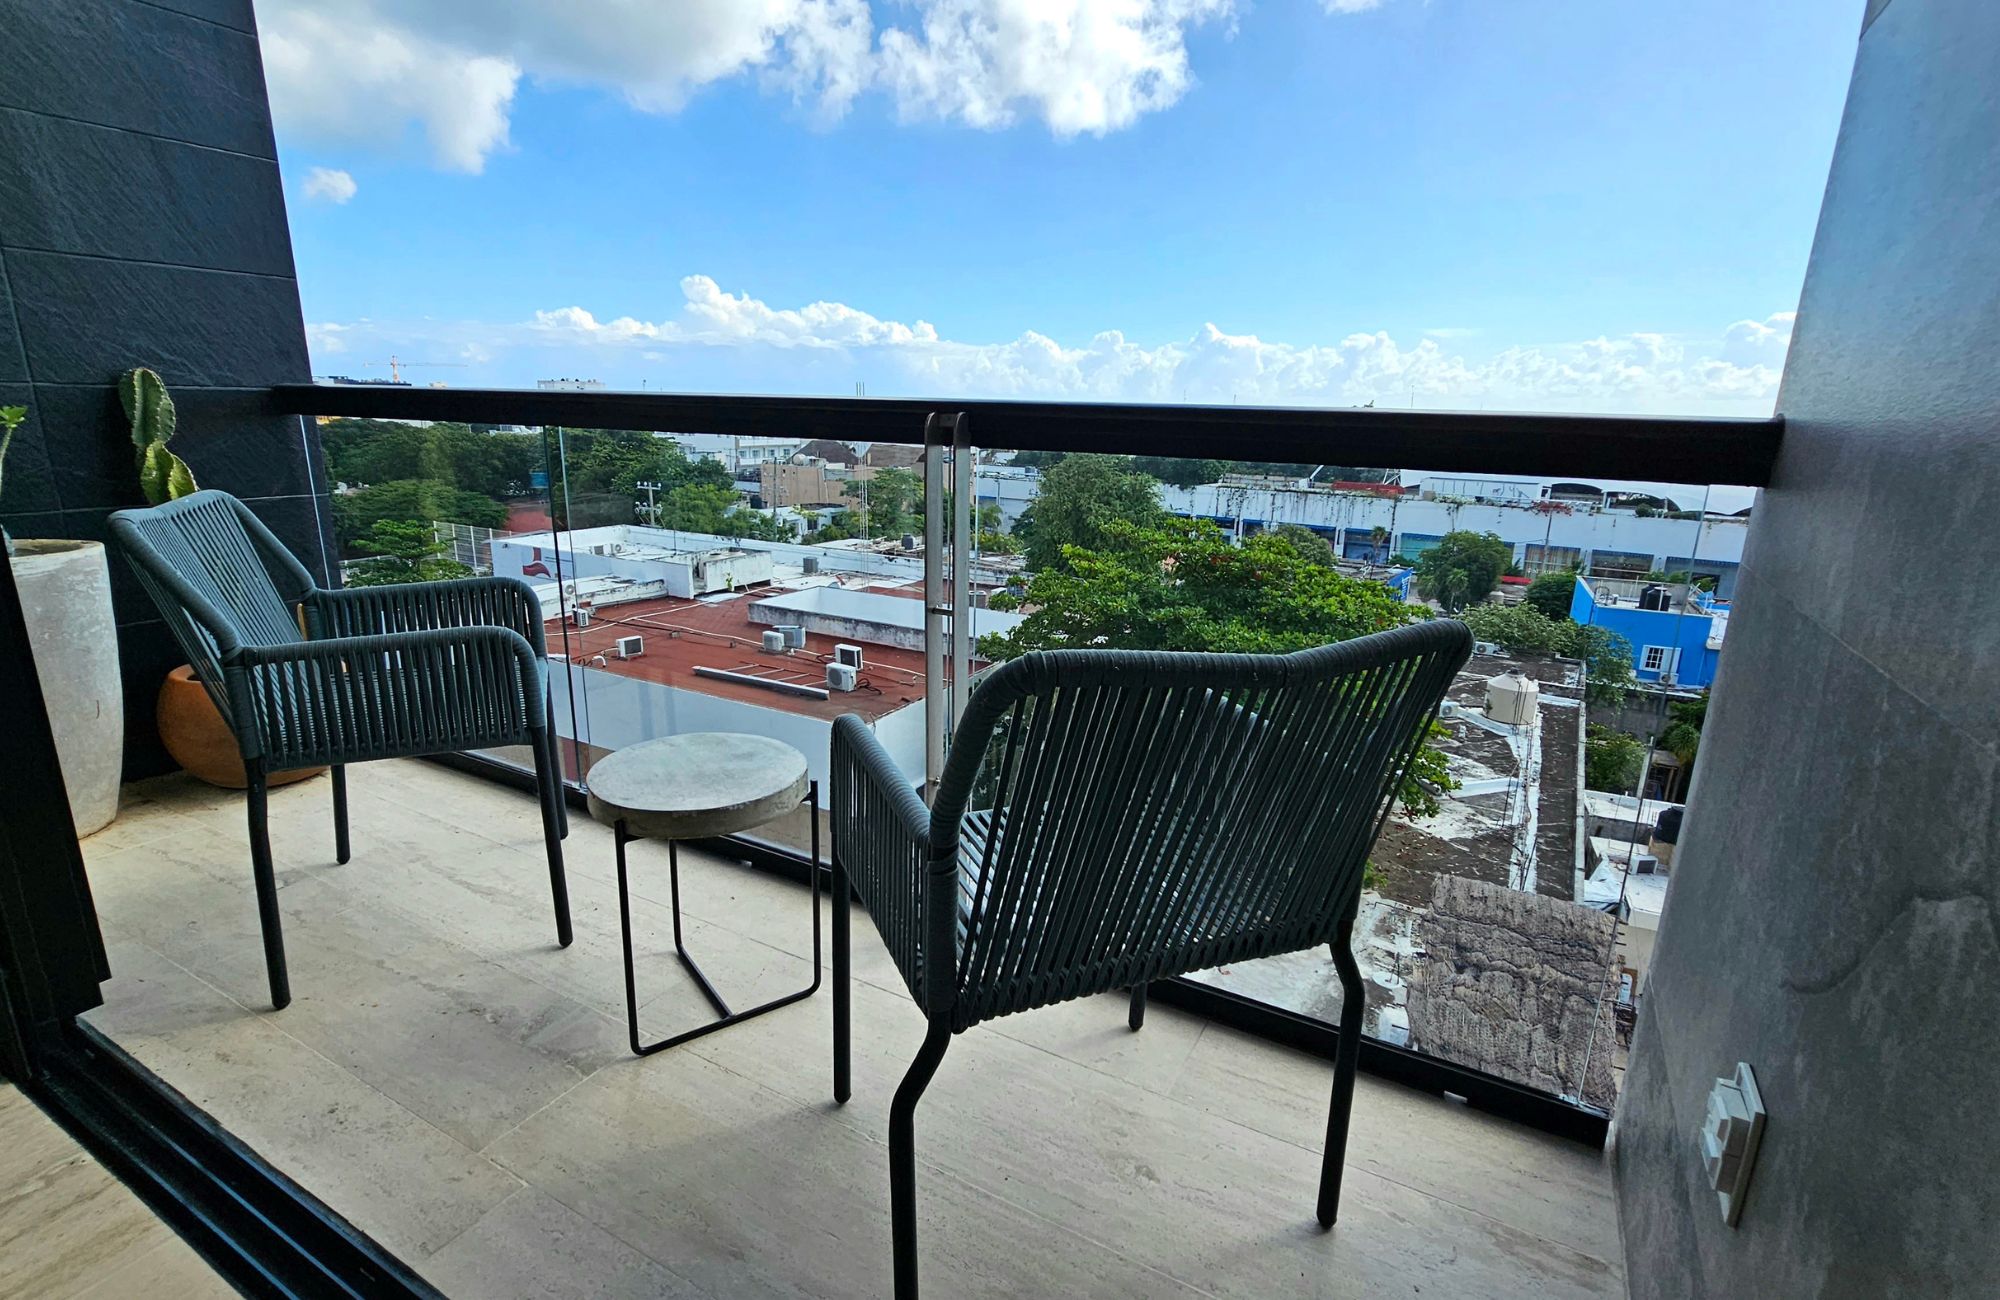 Departamento, 3 albercas, roof top con 6 jacuzzis, area de asador, terraza con barra, Lagunas de Ciudad Mayakoba, residencial con urbanismo